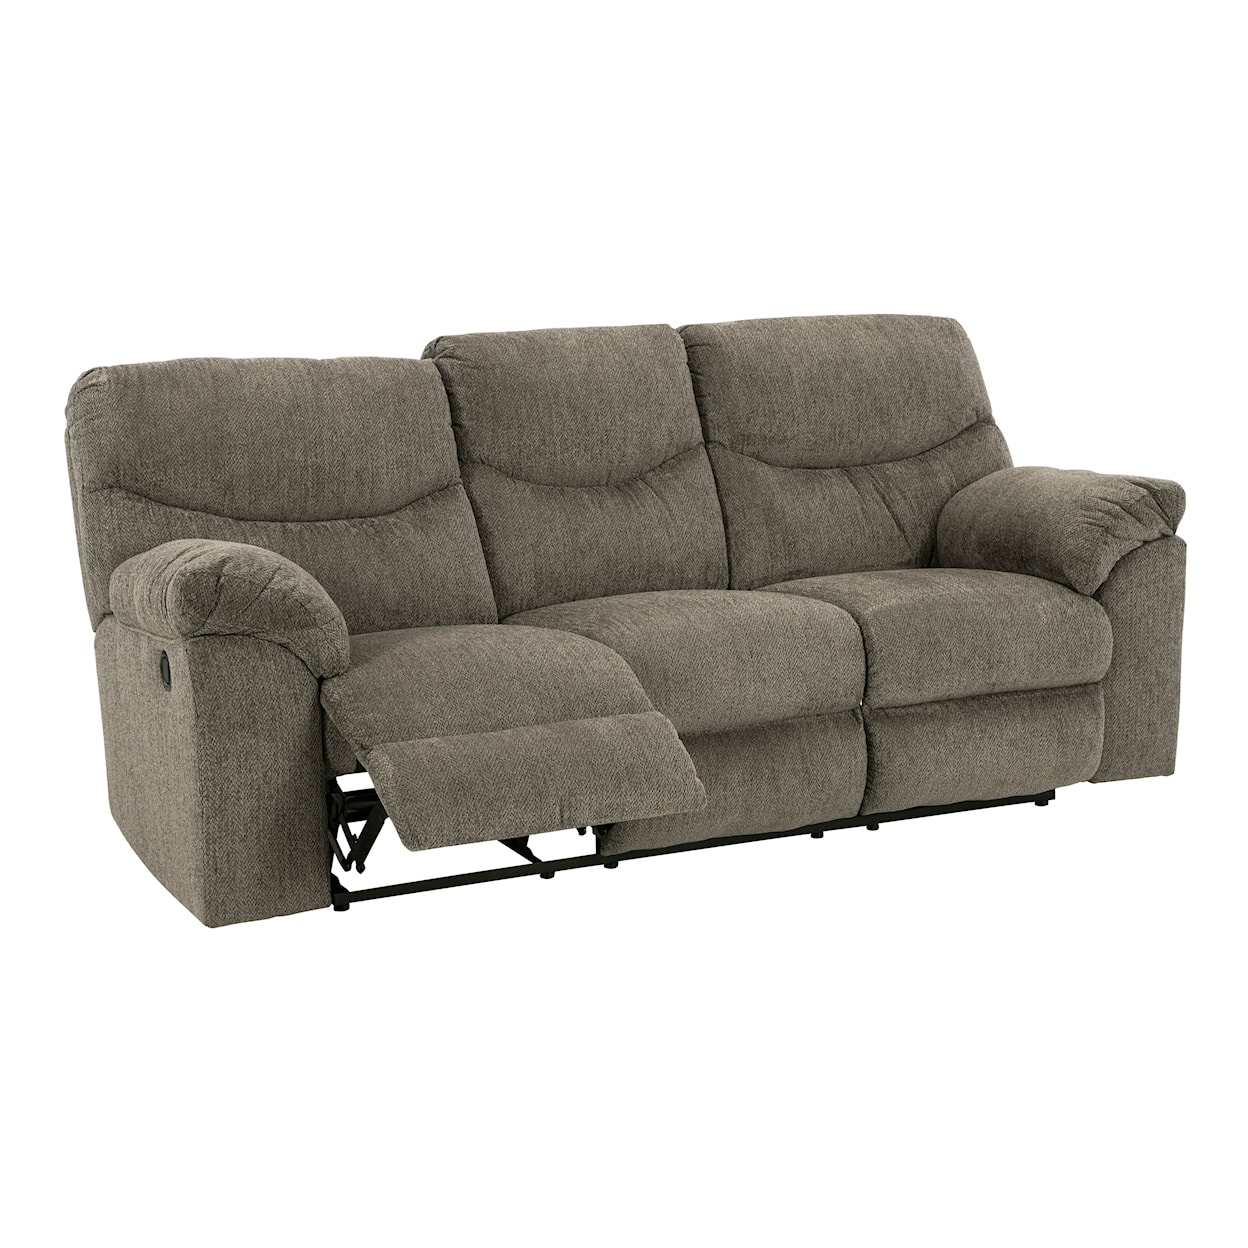 Ashley Furniture Signature Design Alphons Reclining Sofa